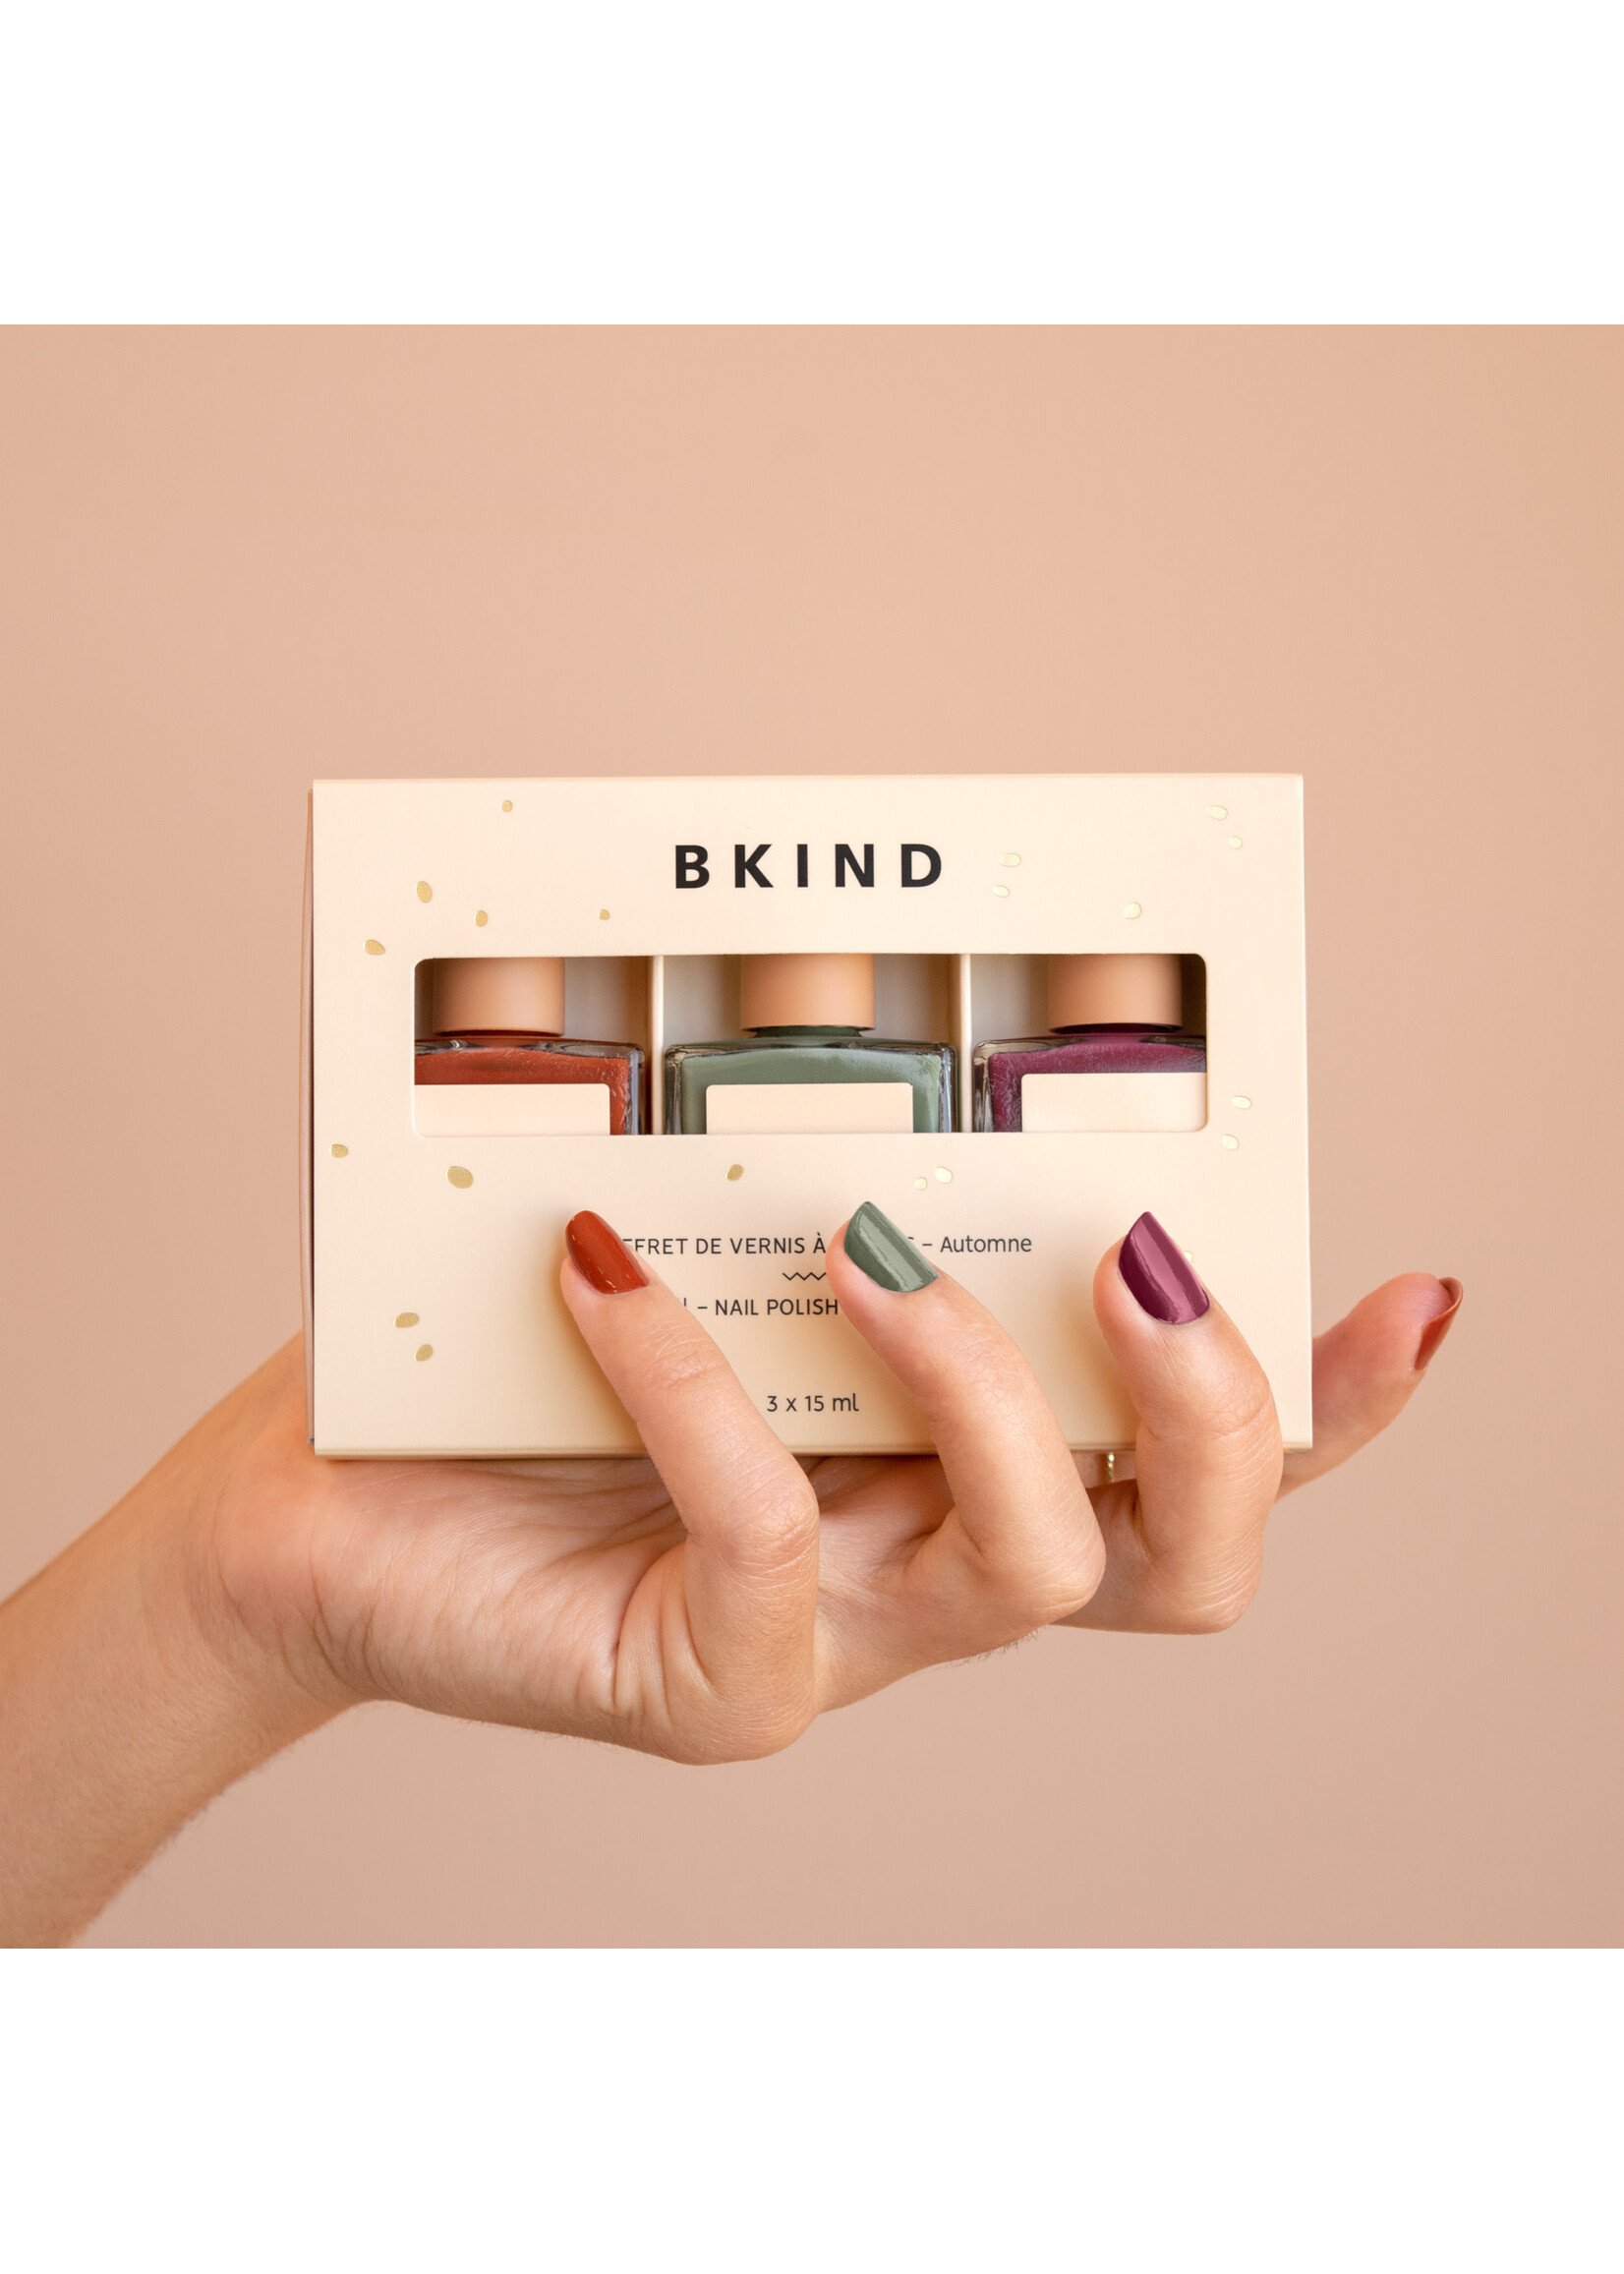 Bkind Coffret vernis  BKIND collection automne 3x15ml